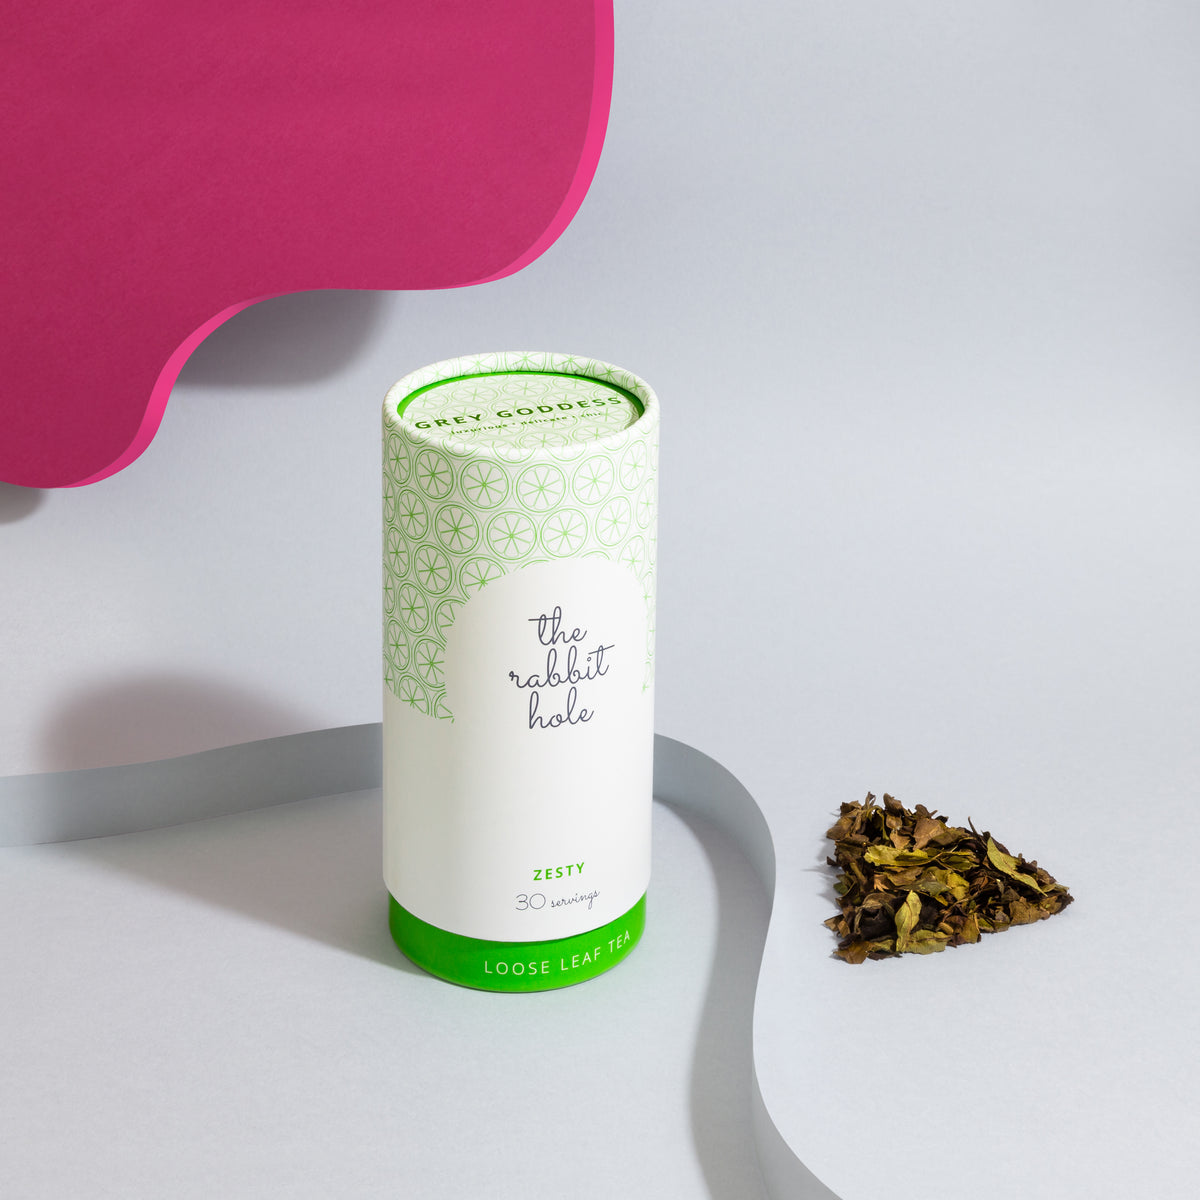 Grey Goddess loose leaf tea by The Rabbit Hole - Australian Made Tea. Tea canister on colourful pink background